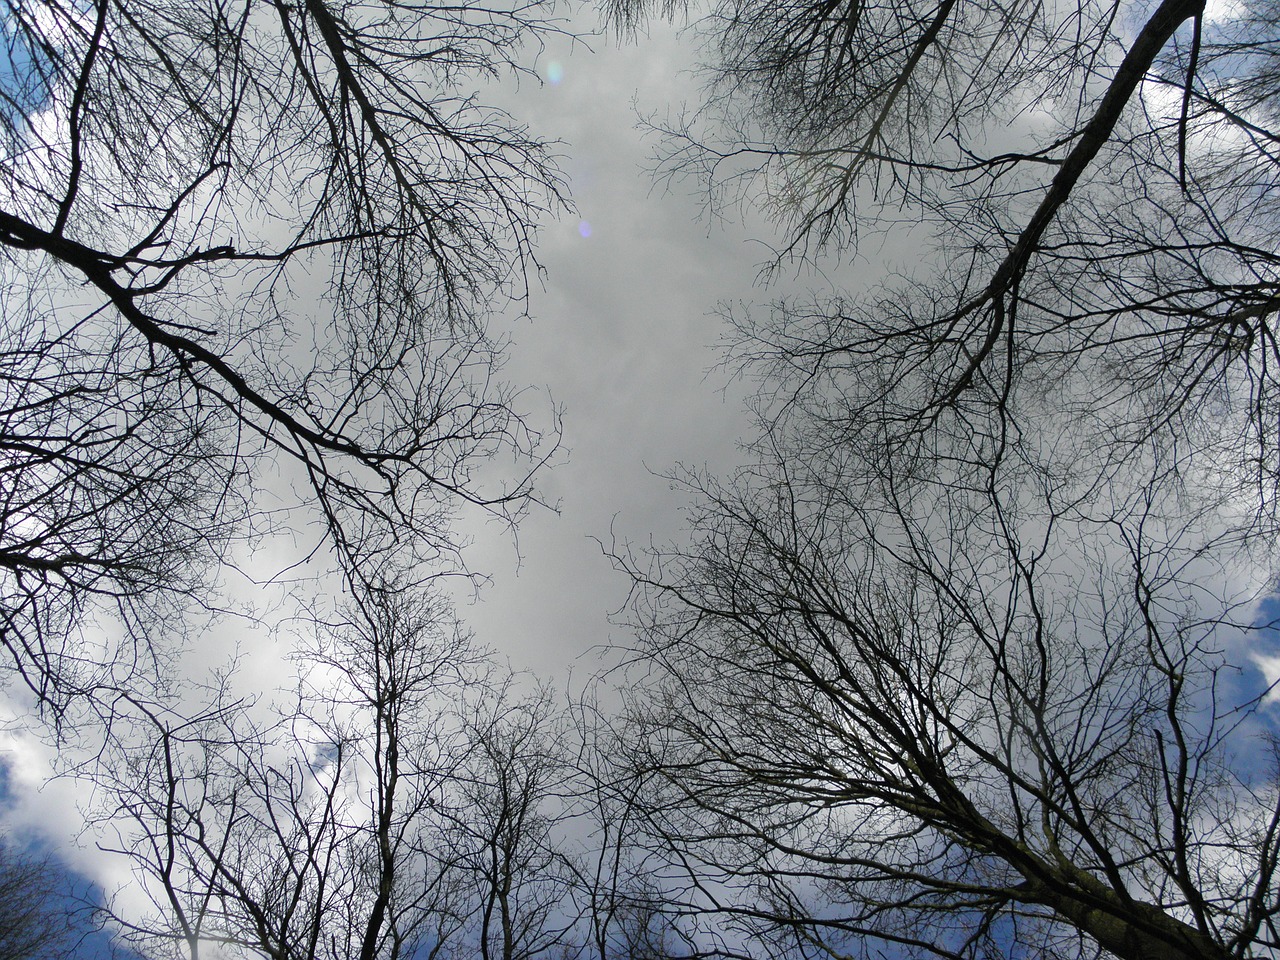 Aesthetic Rain Cloud Sky Grey Trueb Free Image From Needpix Com